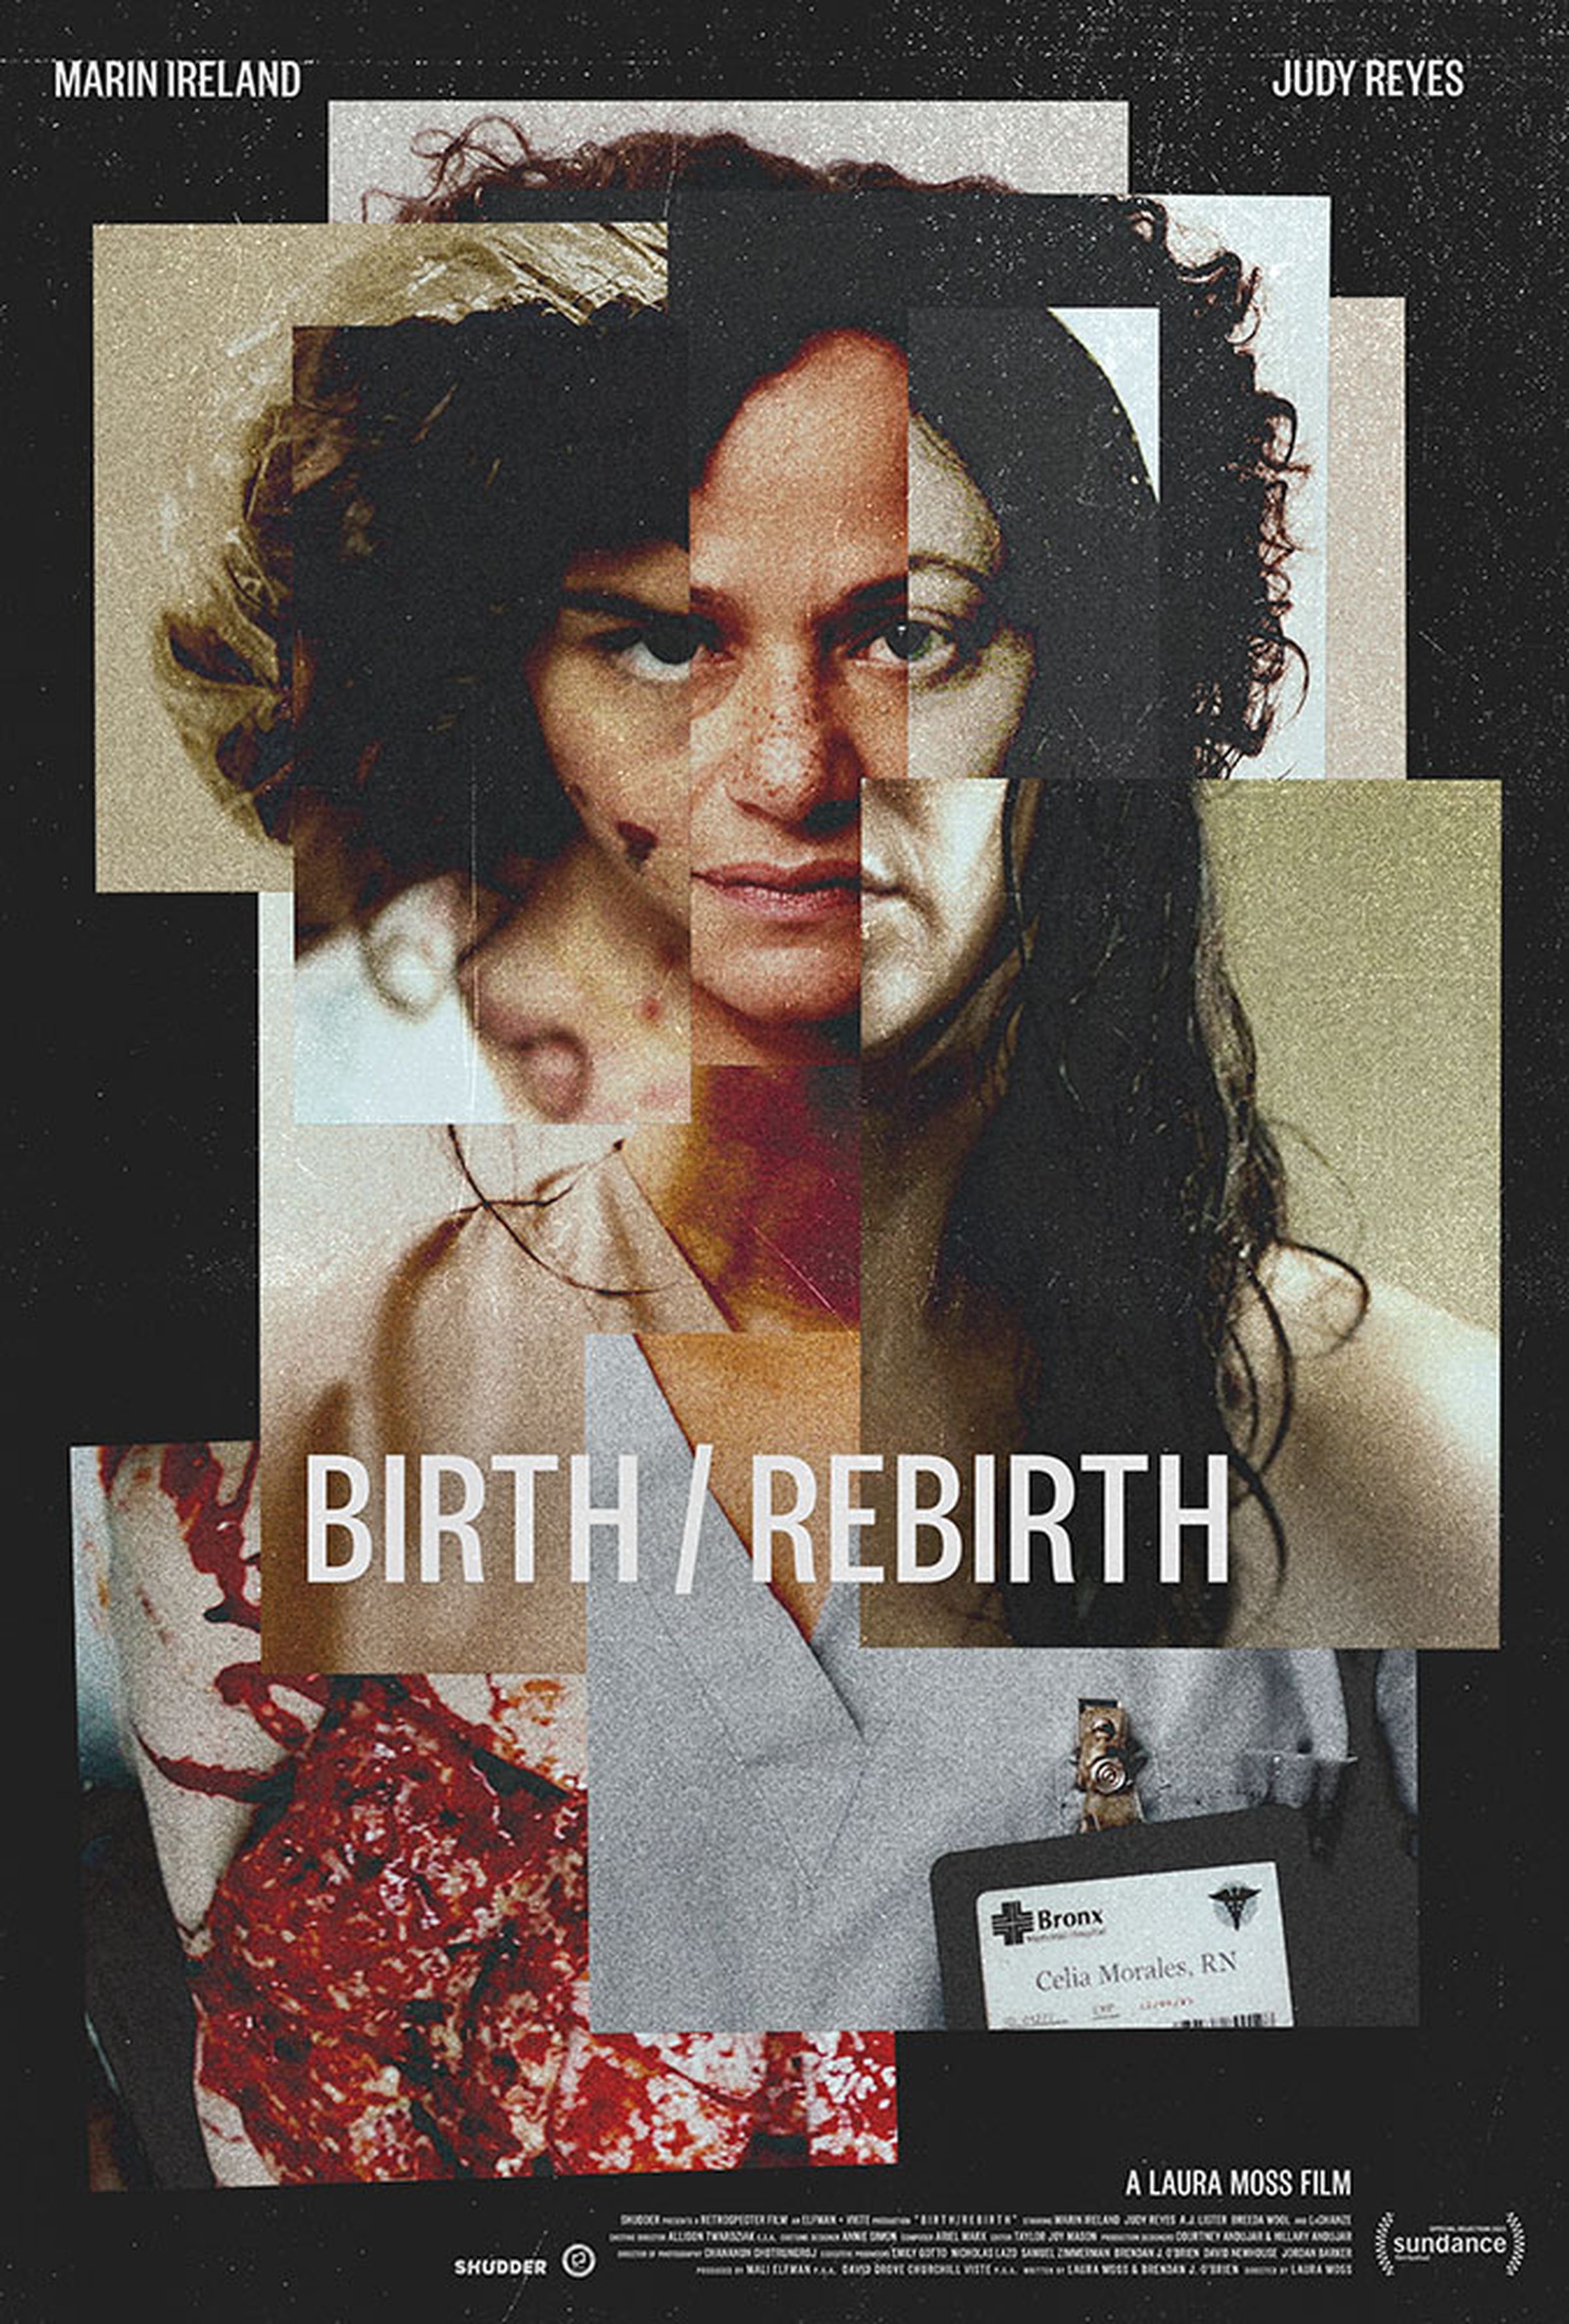 A poster for the horror film Birth/Rebirth.